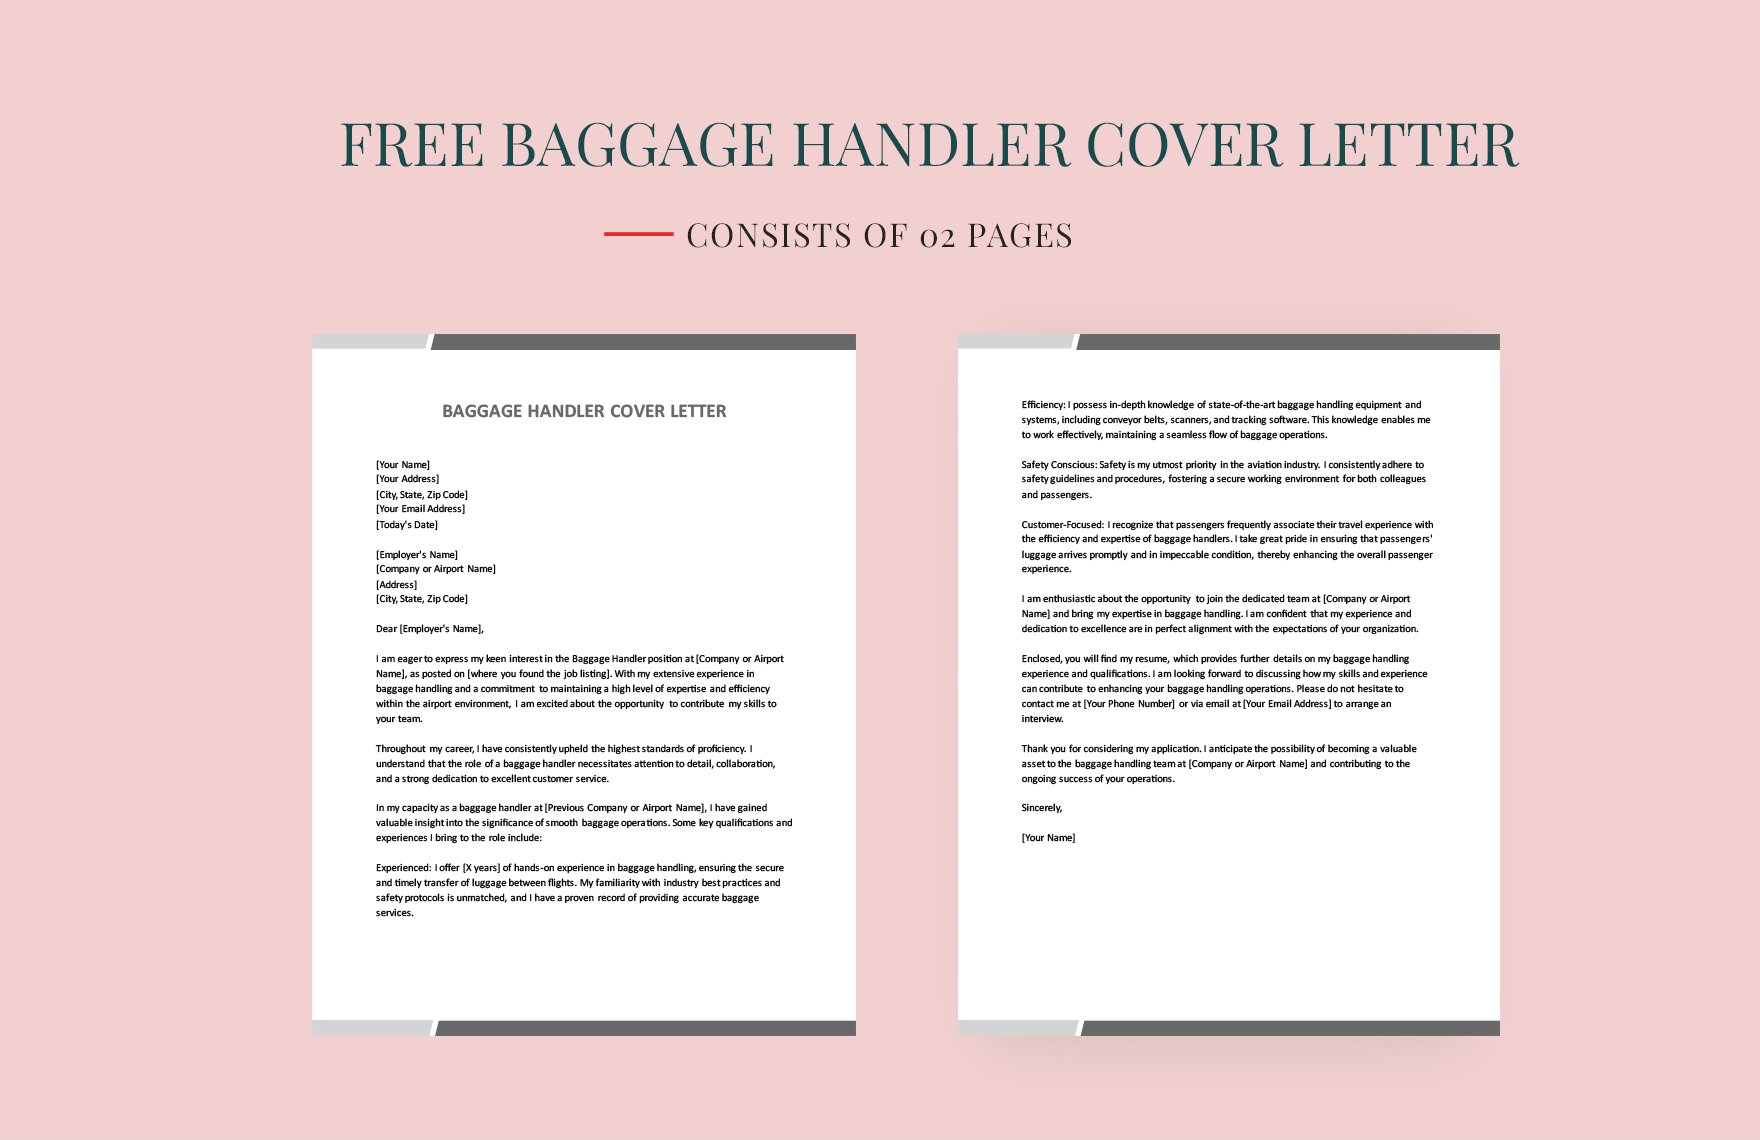 Baggage Handler Cover Letter in Word, Google Docs, PDF